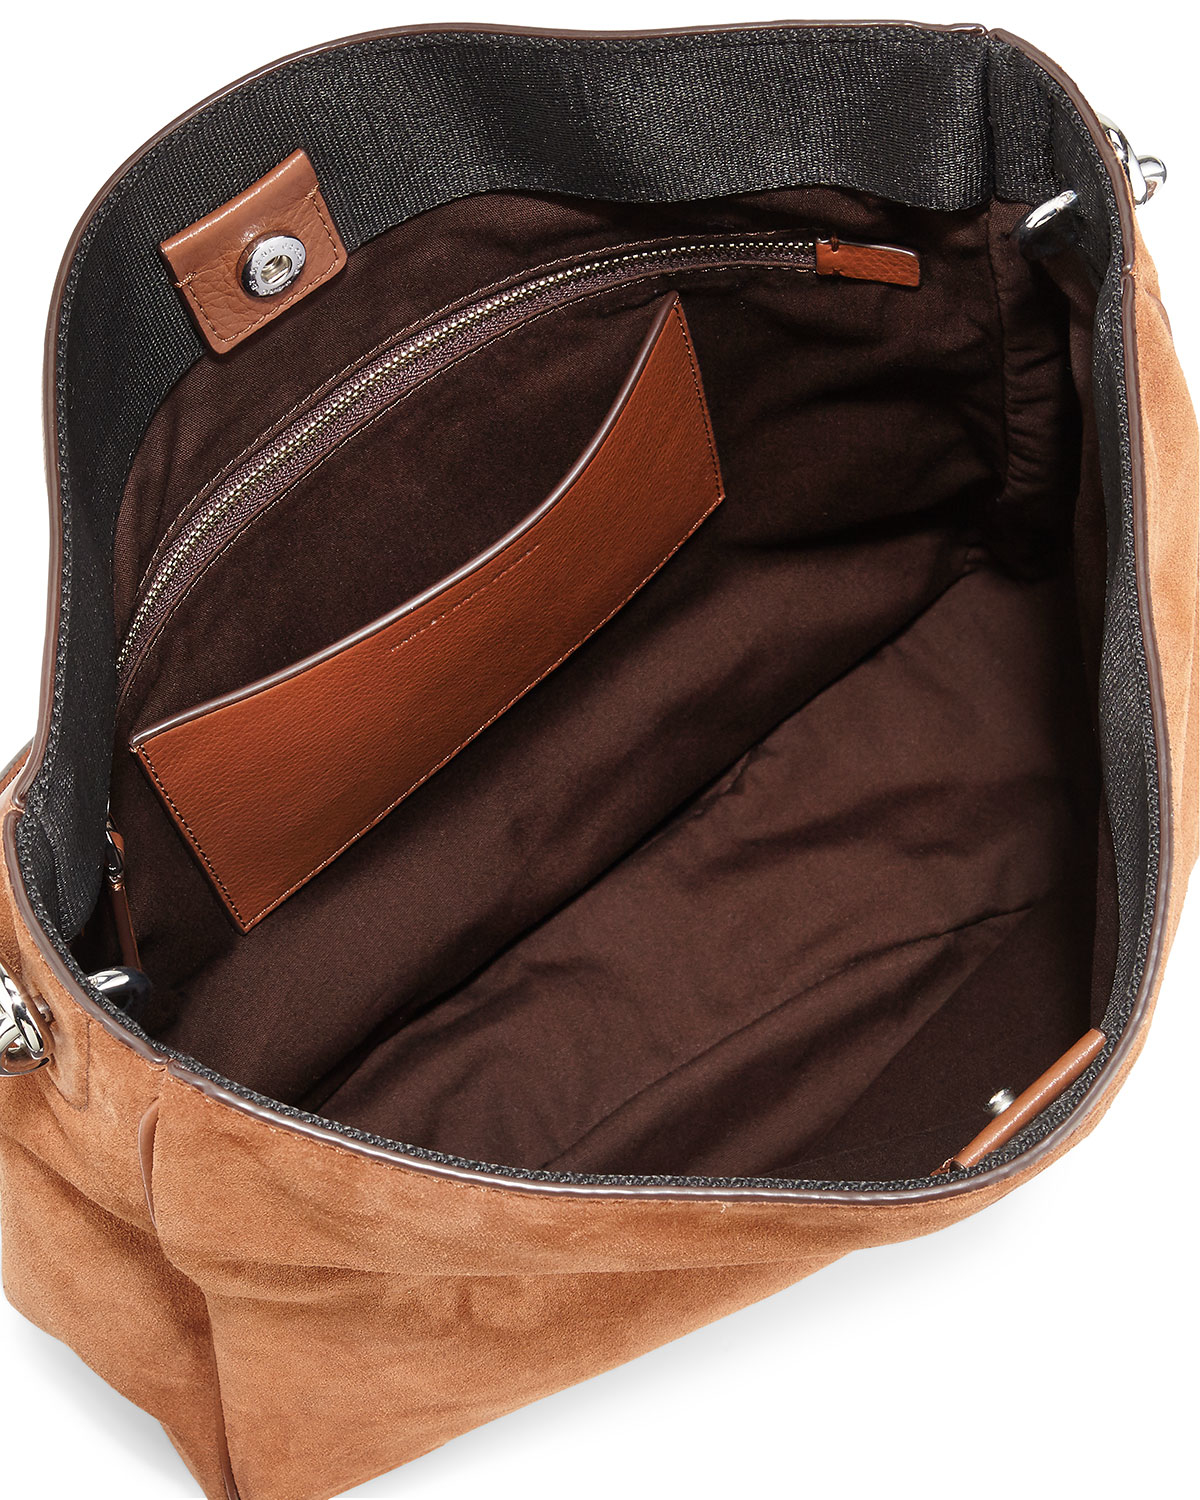 Marc By Marc Jacobs Ligero Sporty Suede Hobo Bag in Cinnamon (Brown) - Lyst